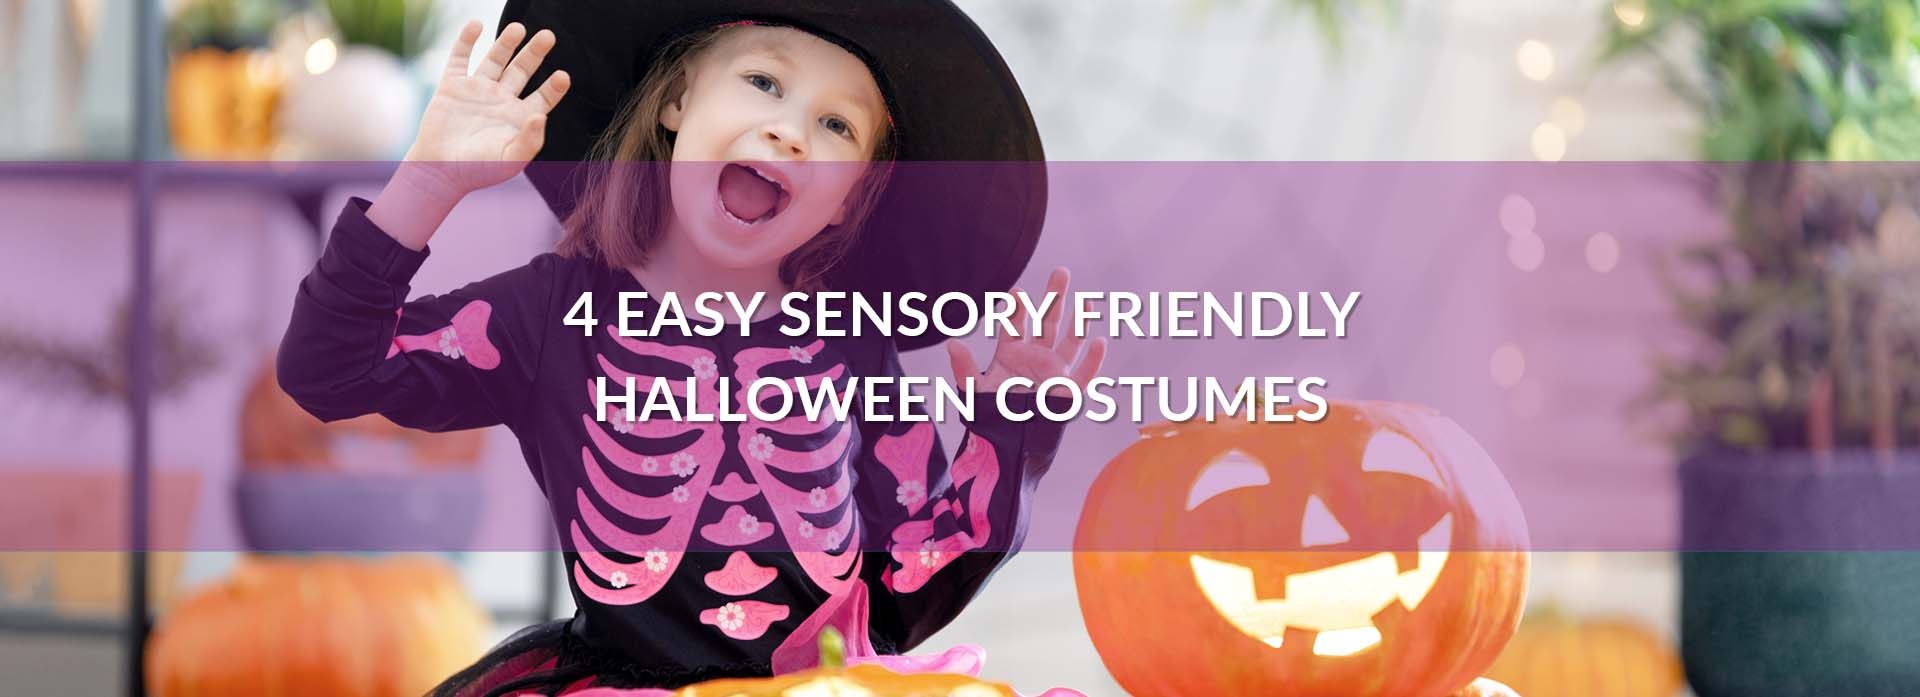 4 Easy Sensory Friendly Halloween Costumes